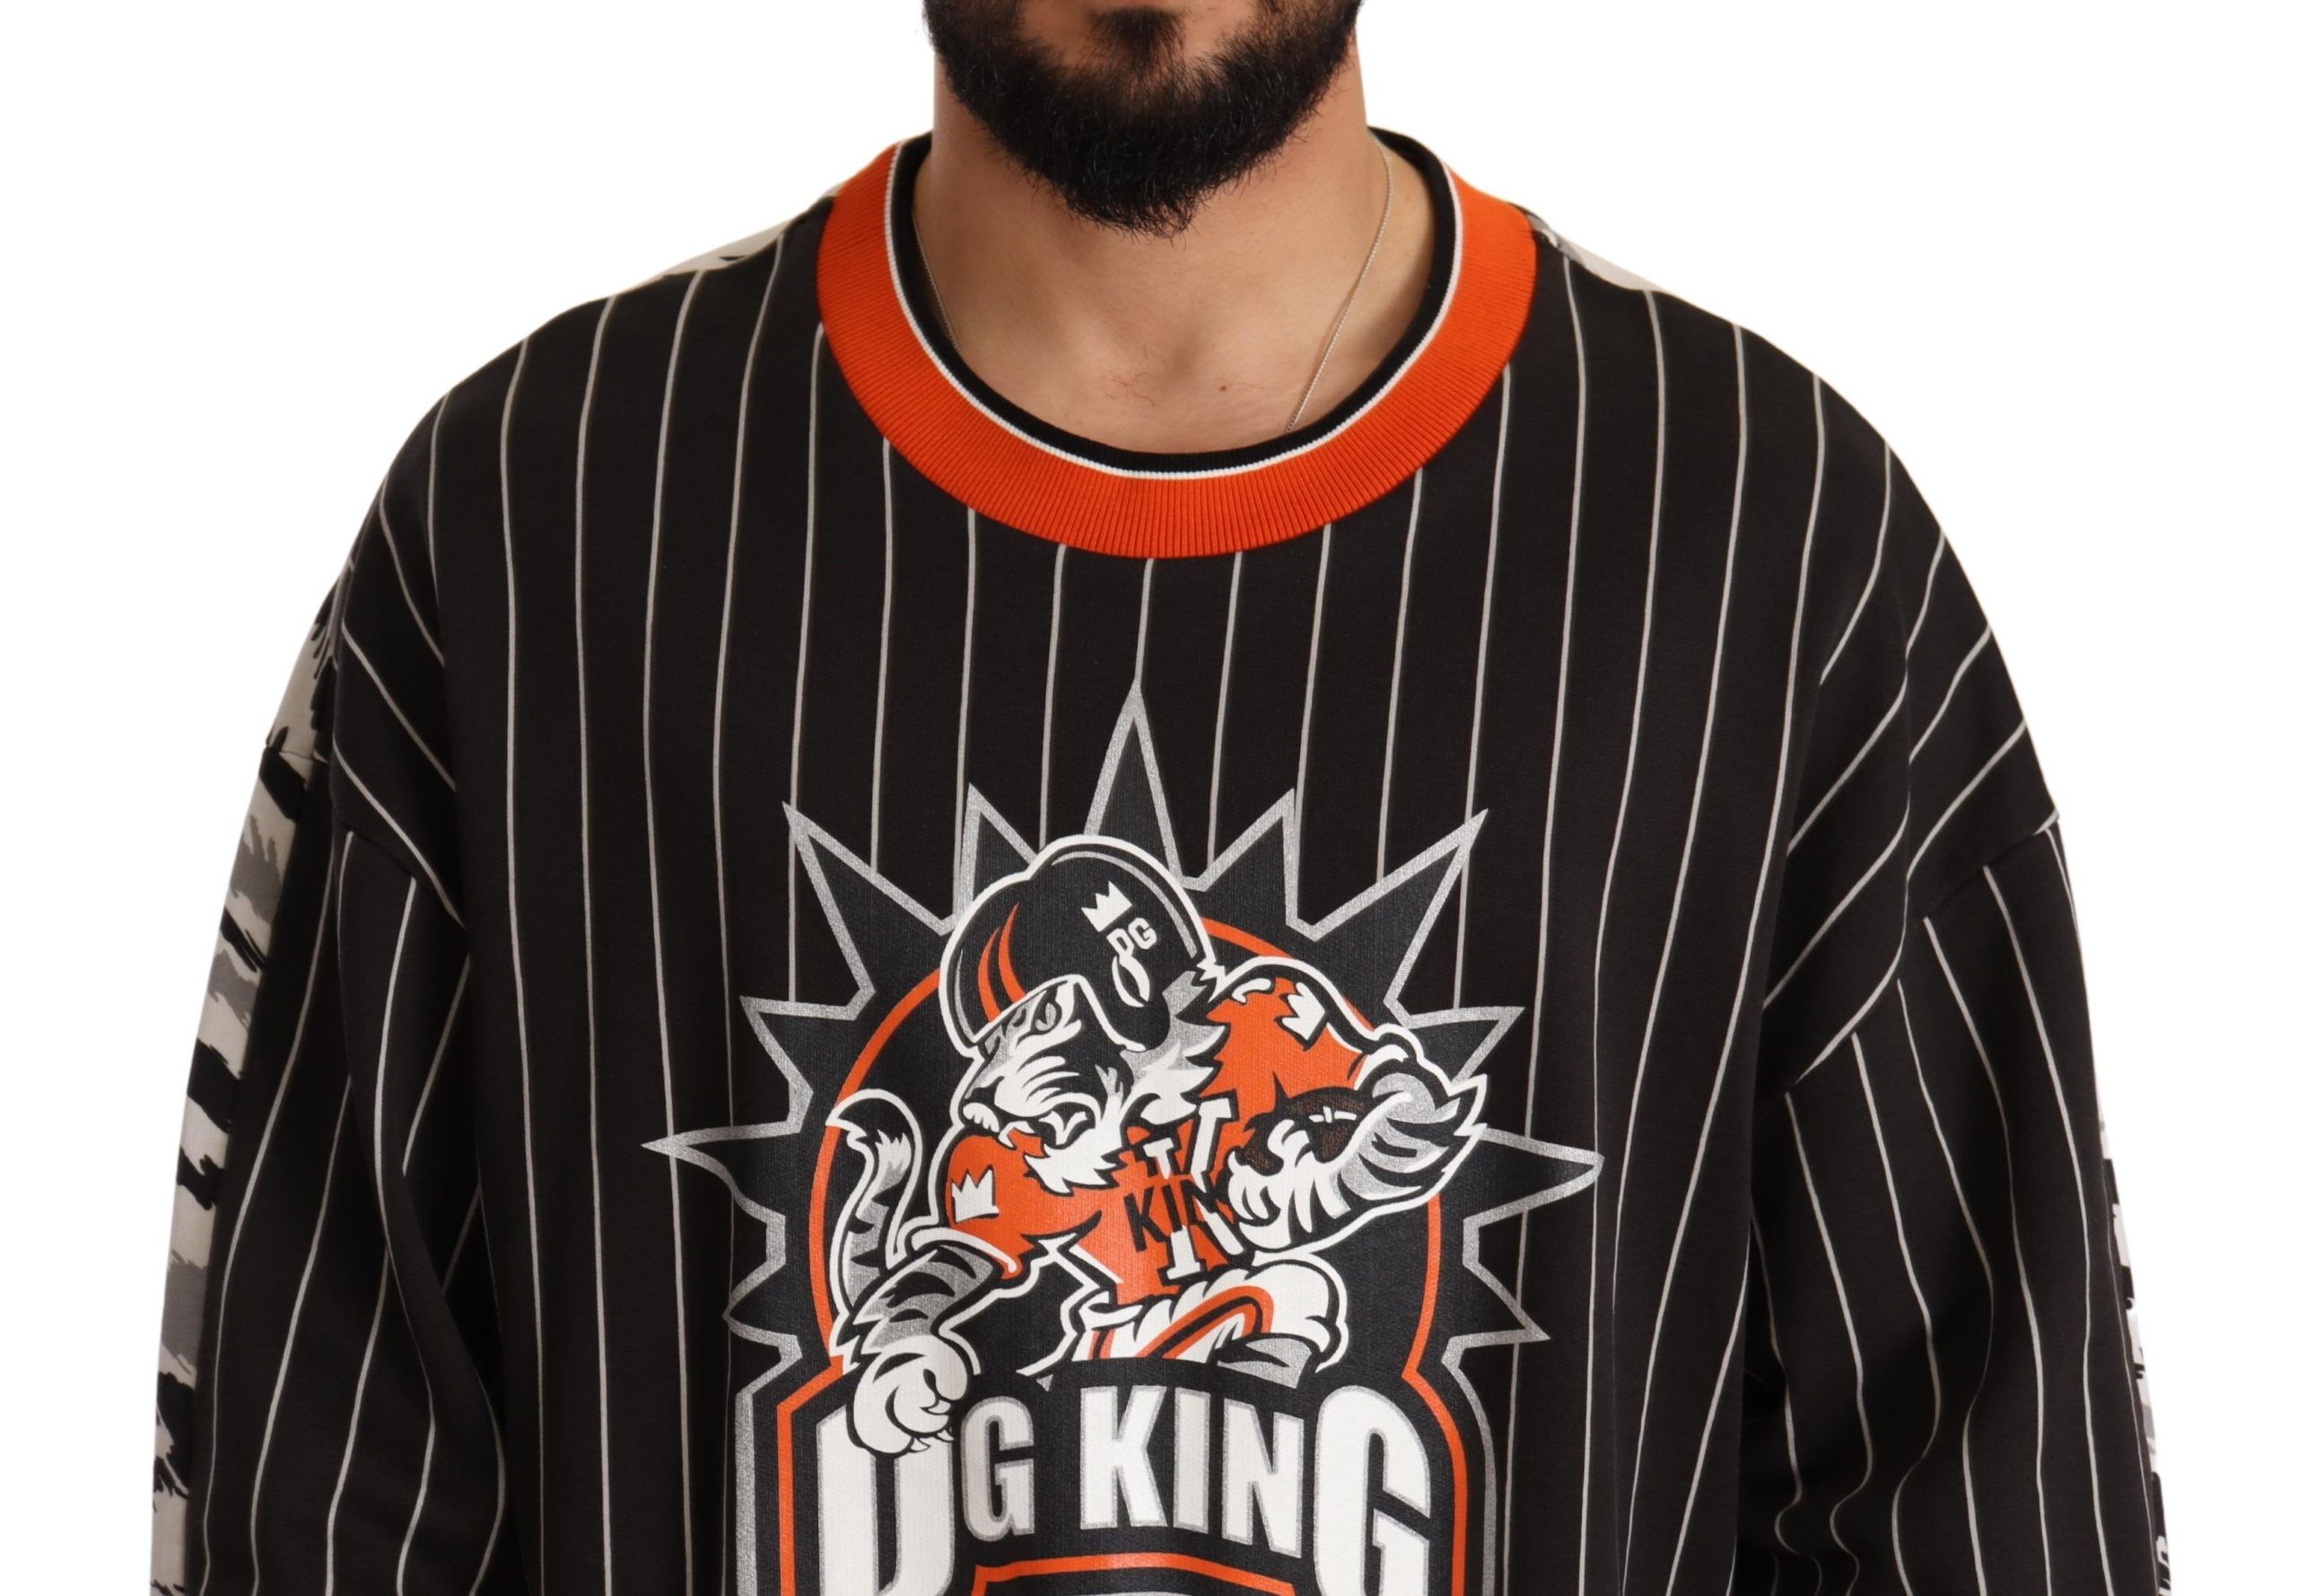 DG King Print Sweater